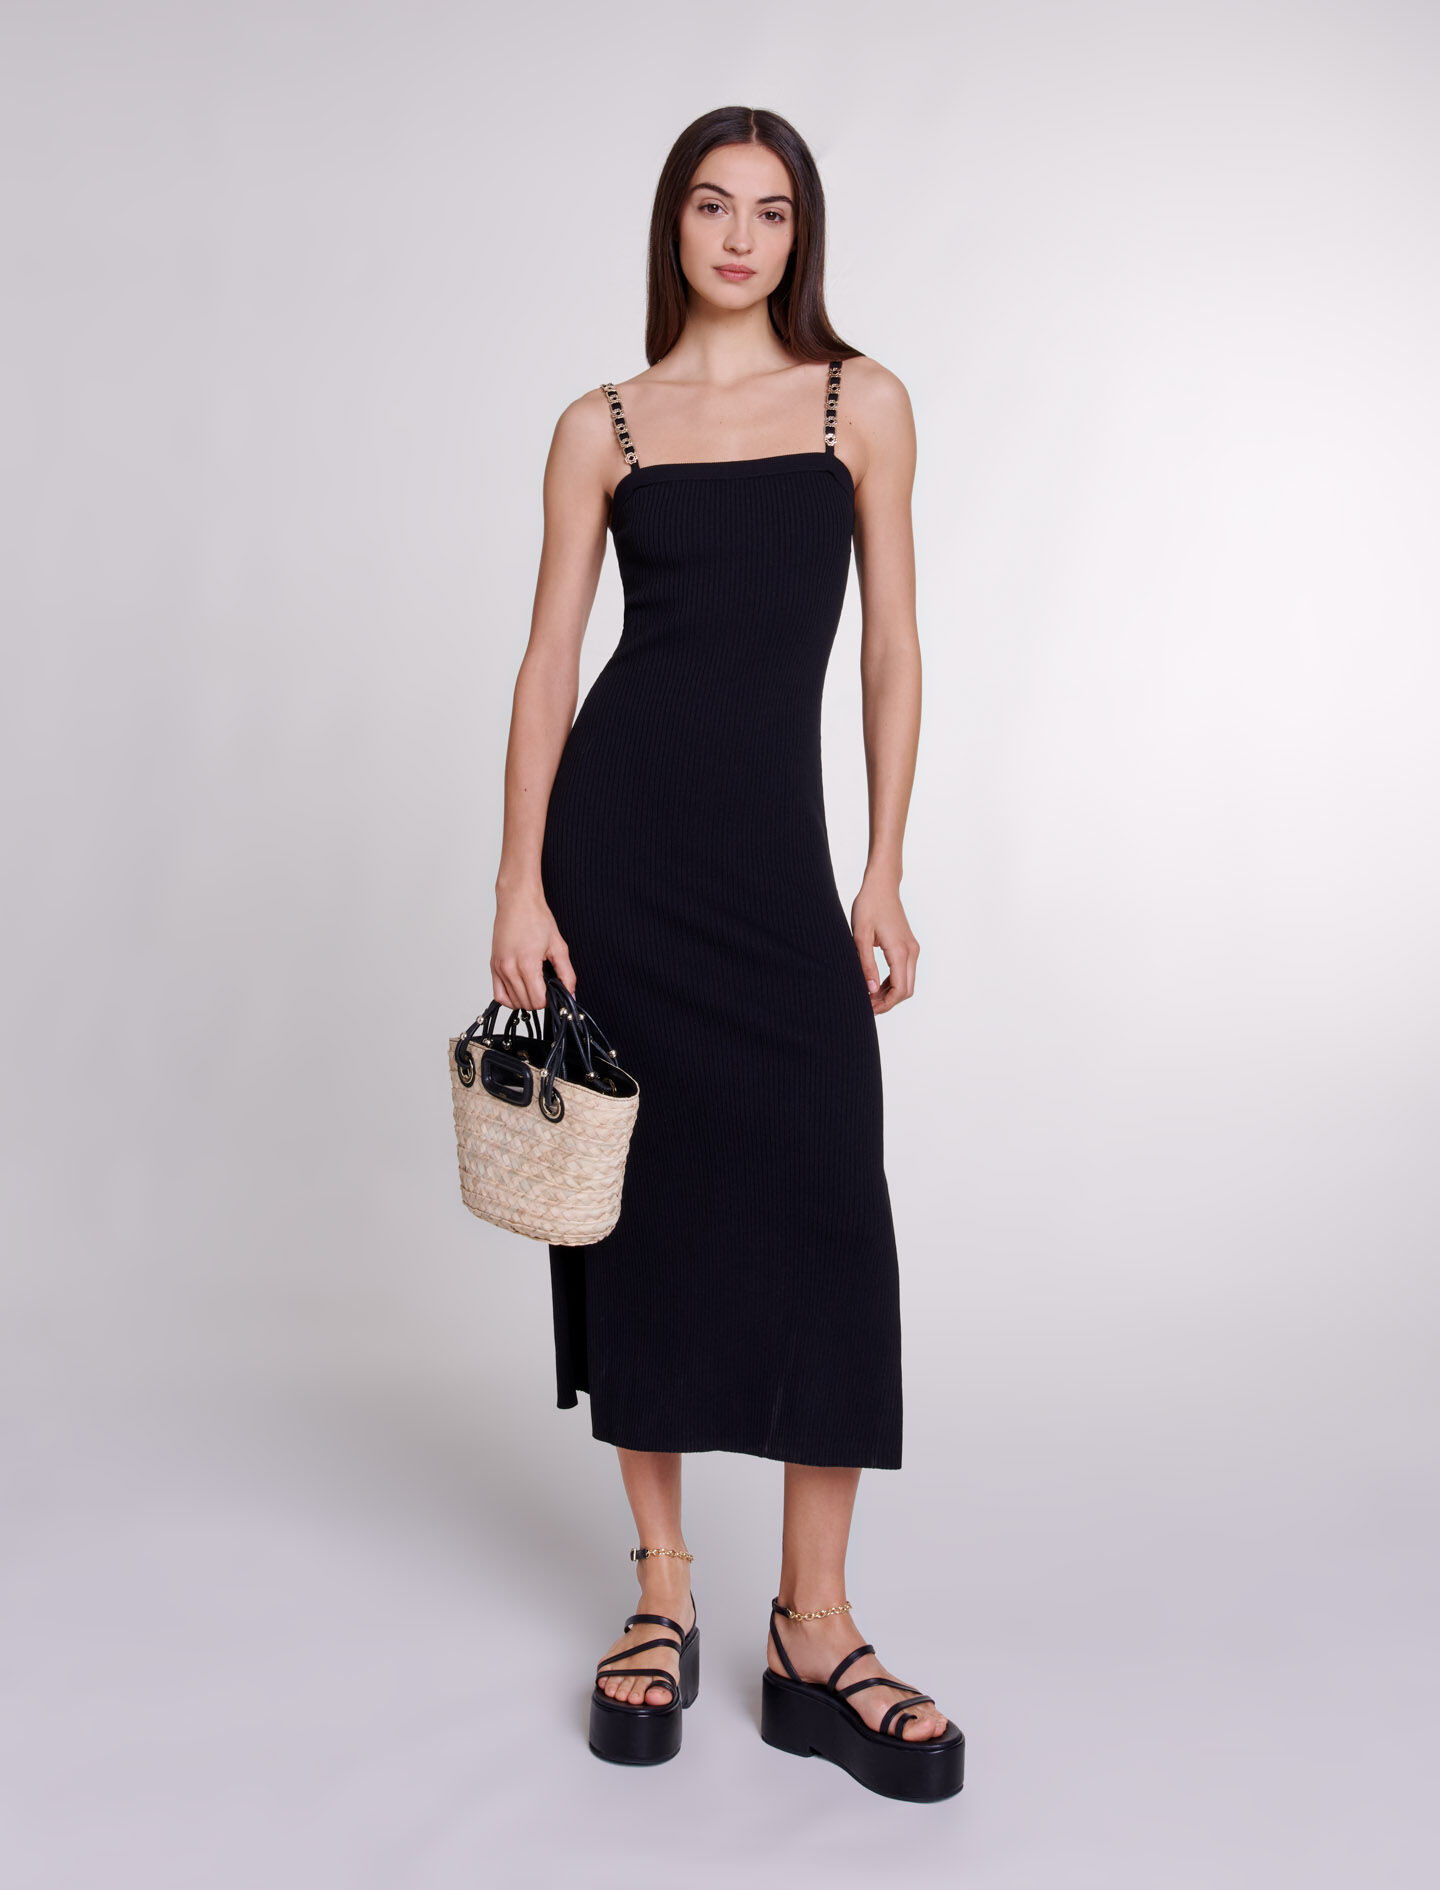 Women's Black dresses - The Latest Styles | Maje